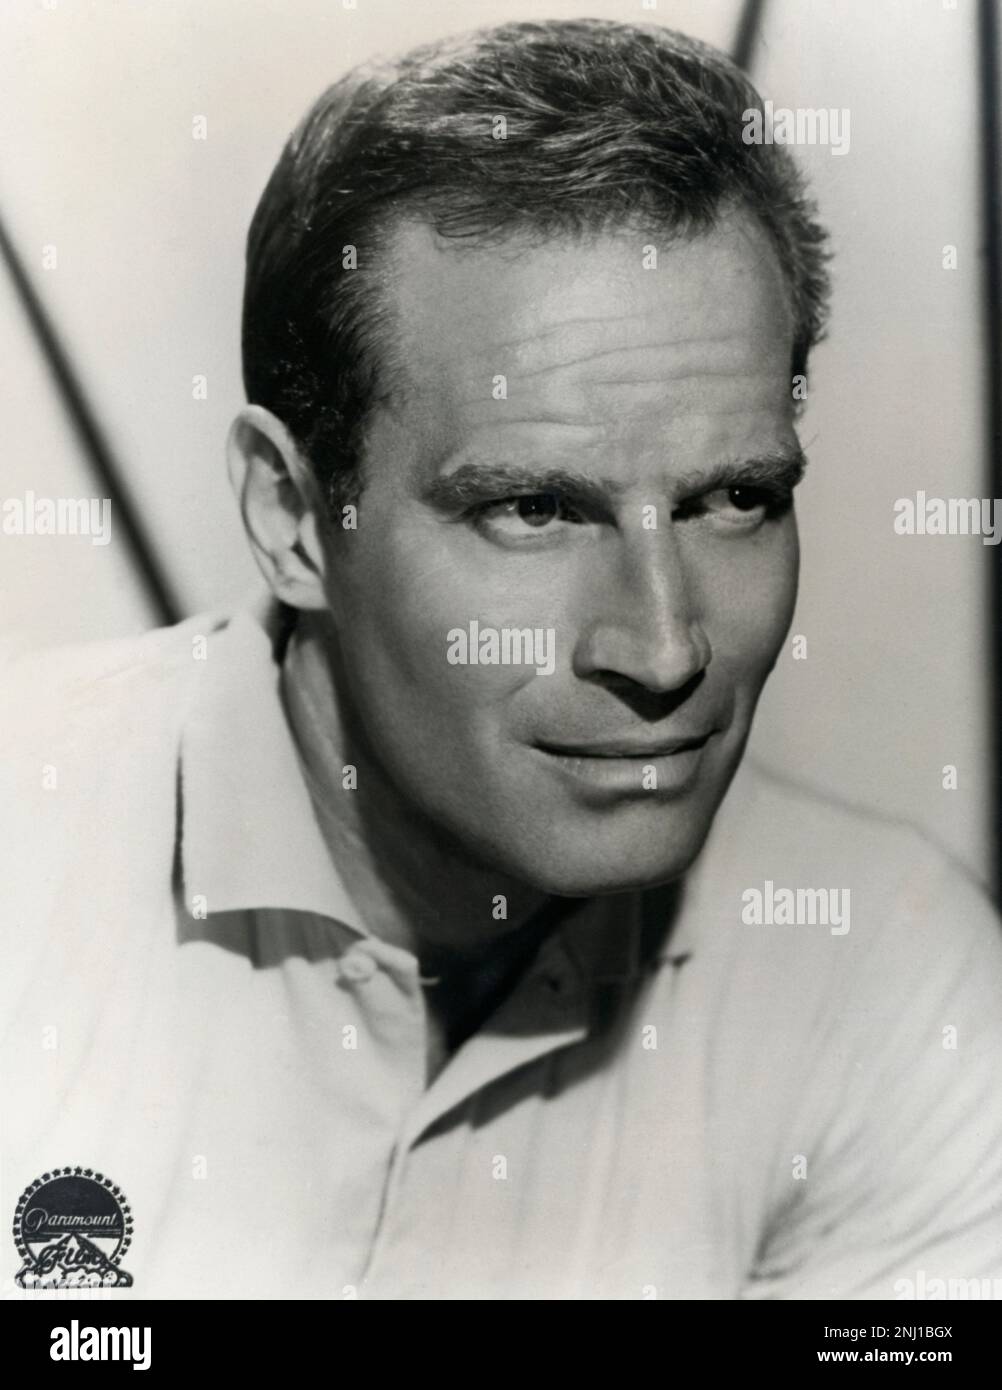 Charlton Heston (1923-2008), actor de cine estadounidense. Fotografía promocional de Paramount. Stock Photo